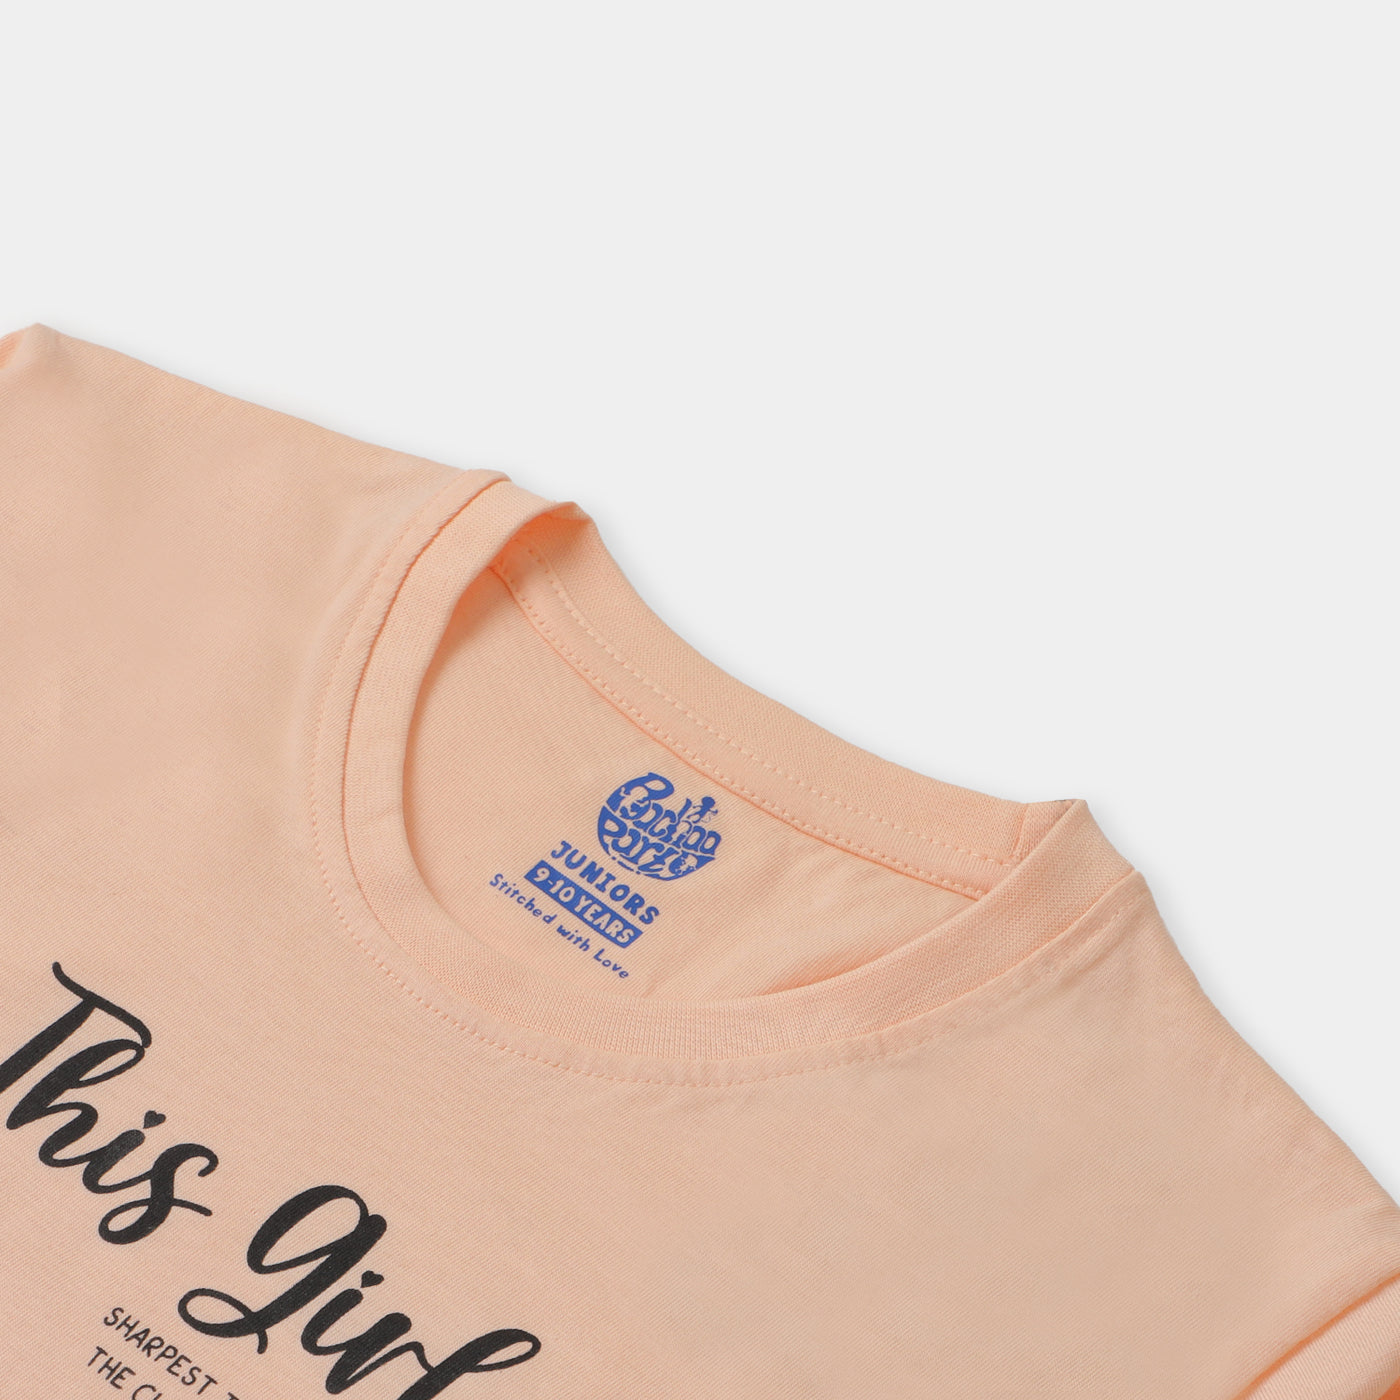 Girls T-Shirt F/S Super Cool - Pale Peach